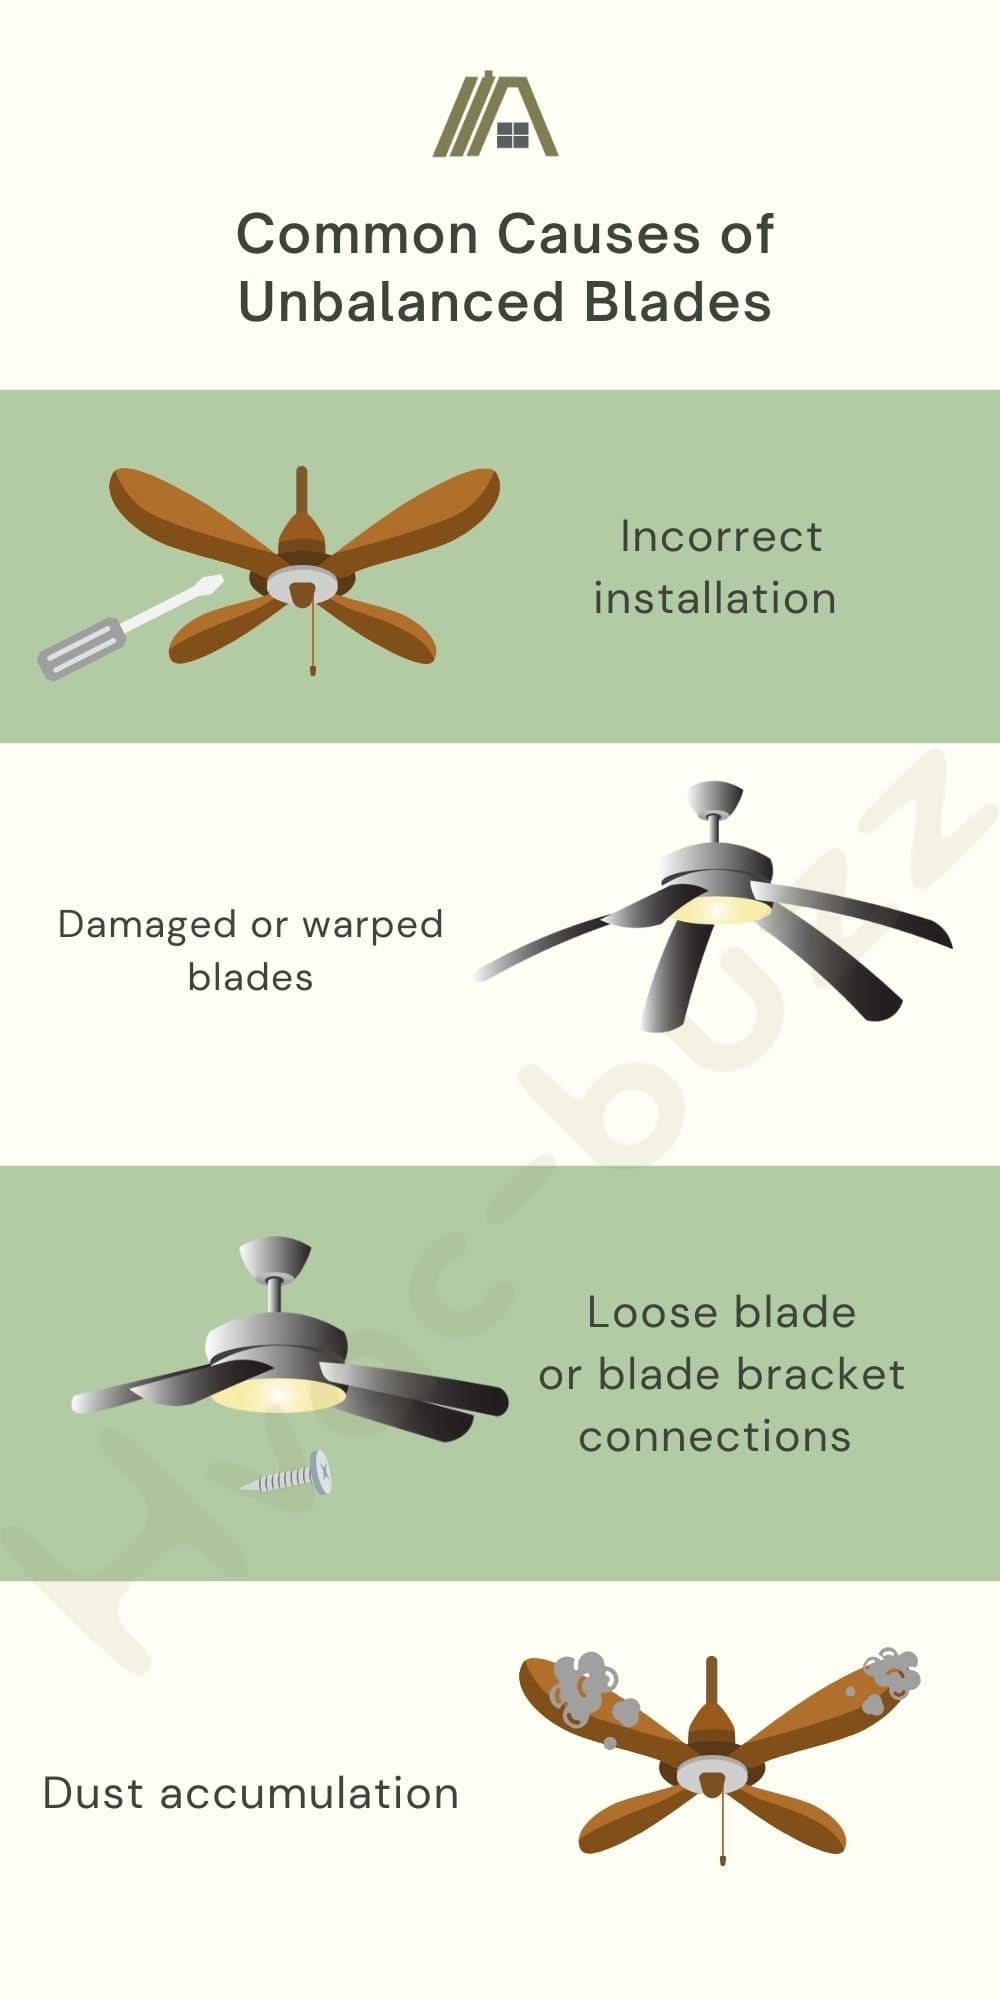 Common Causes of Unbalanced Blades